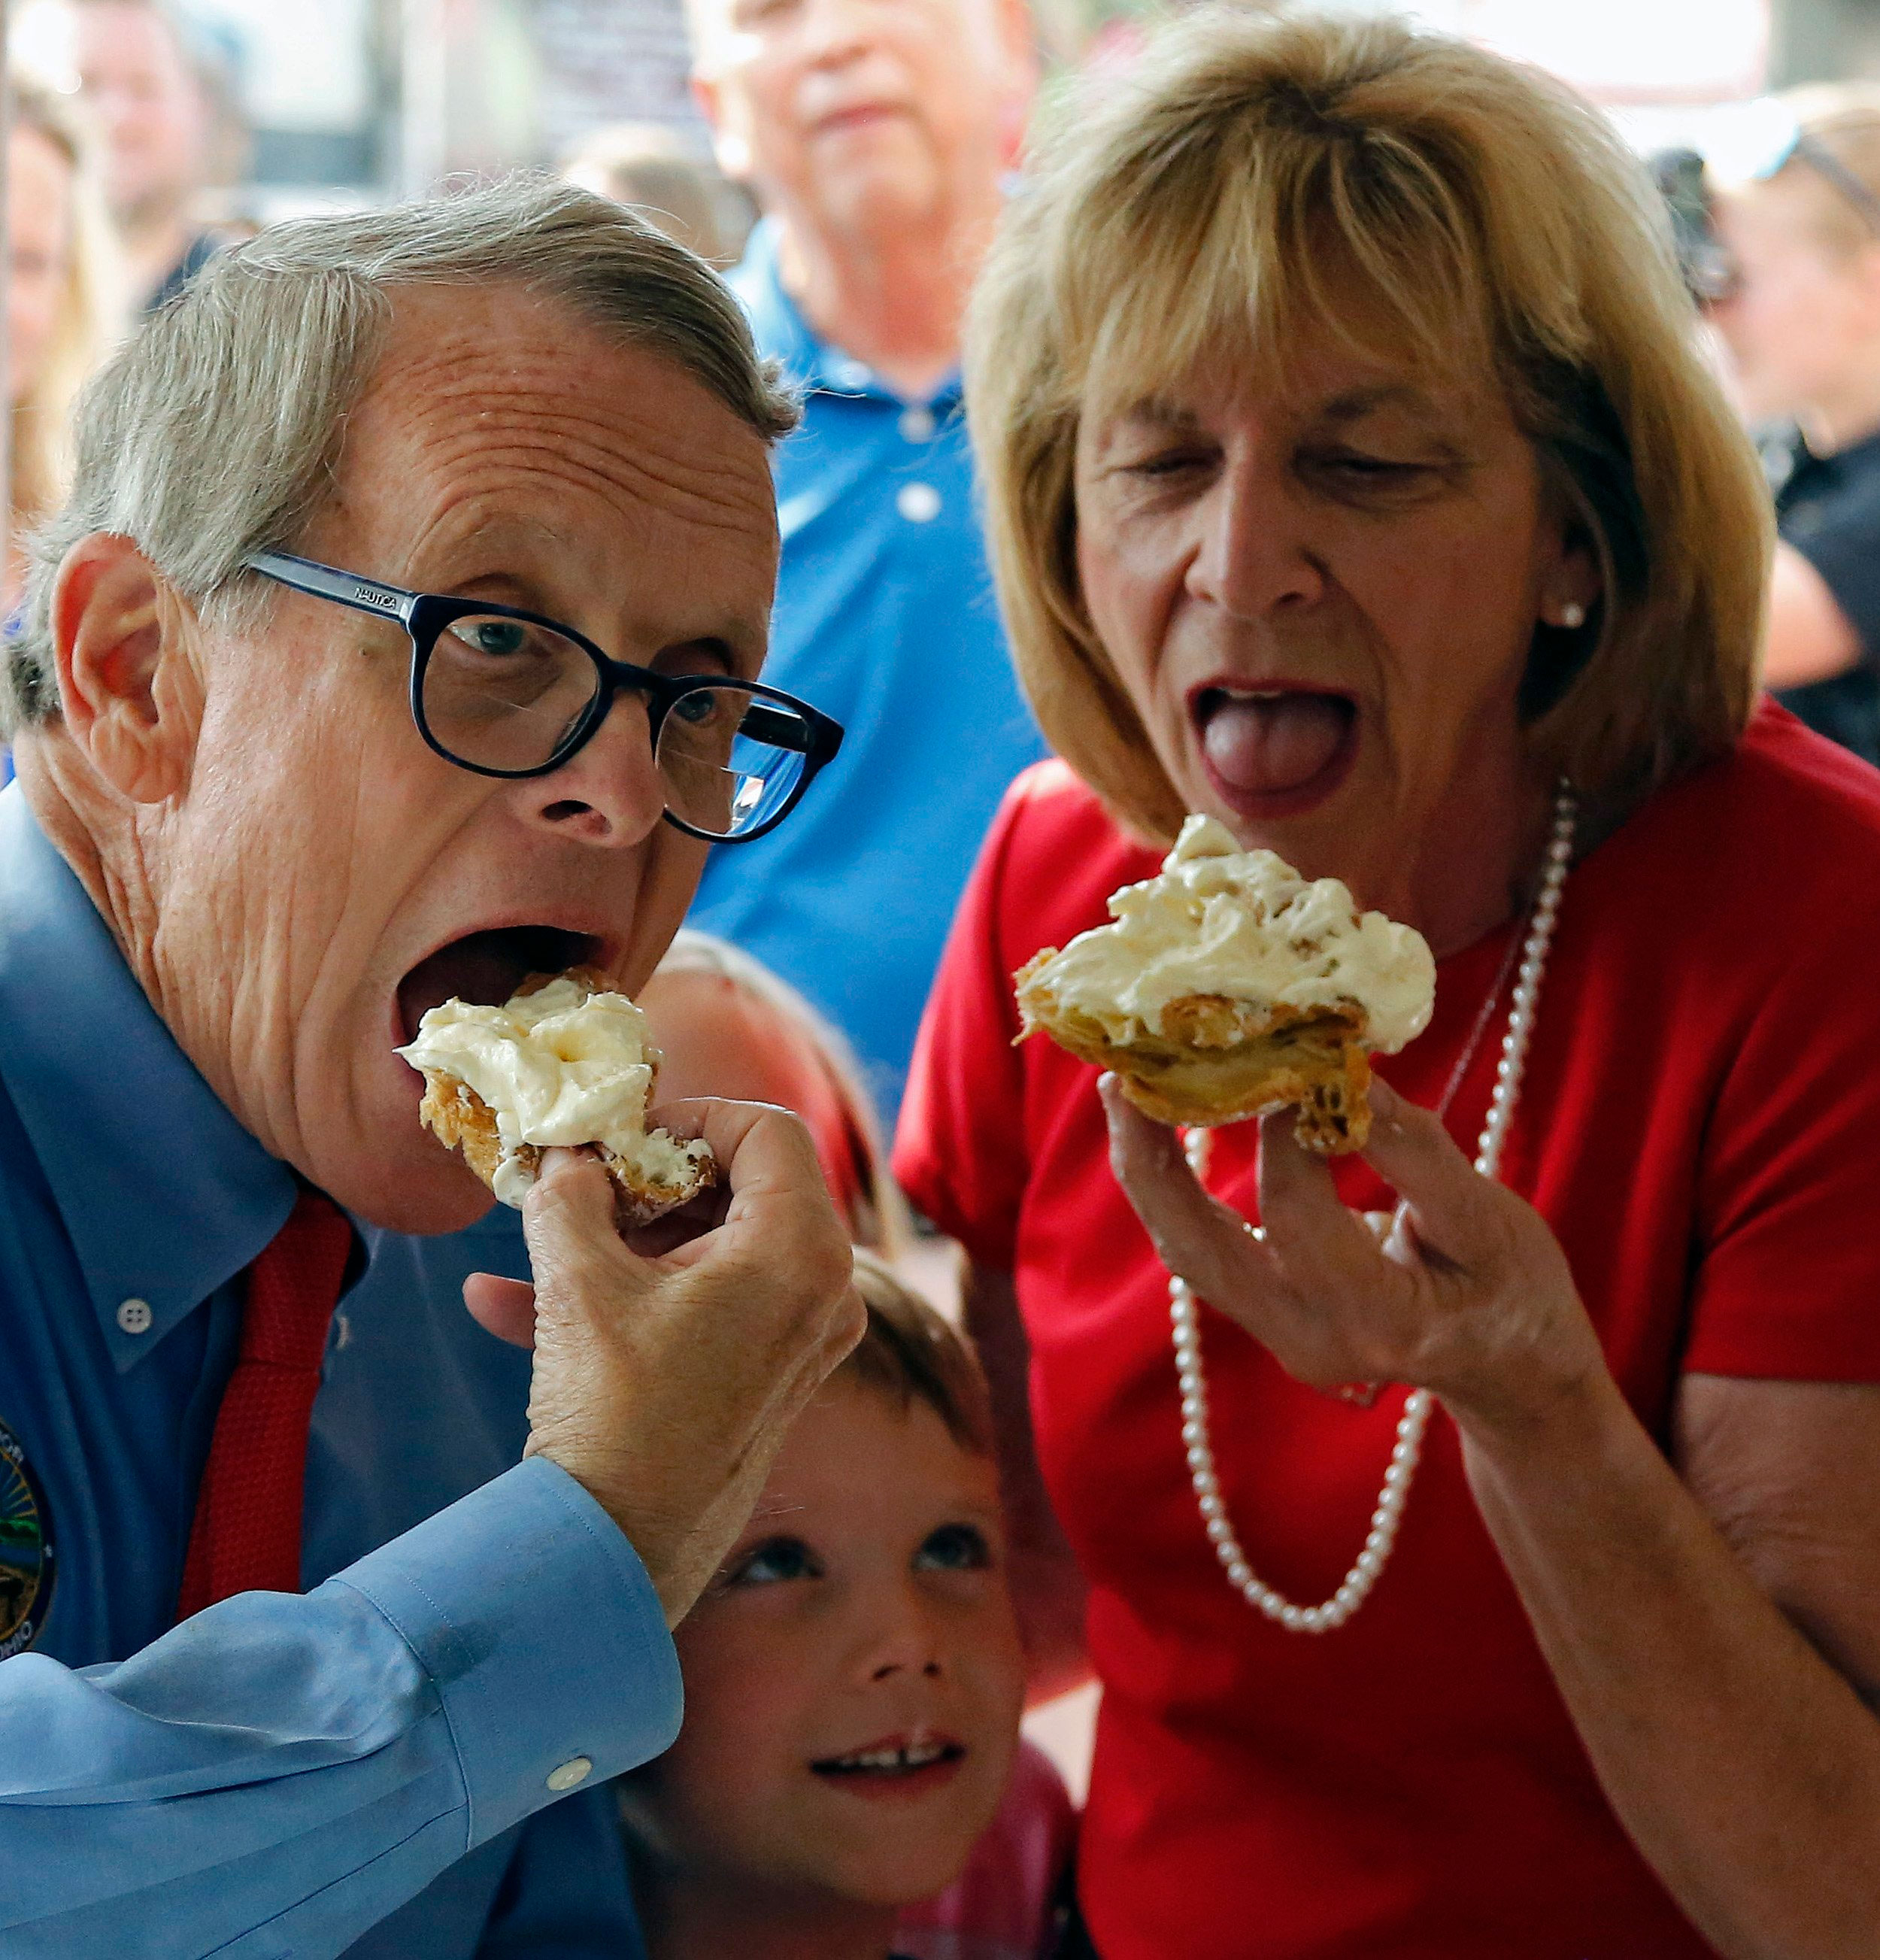 Ohio Gov. Mike DeWine and his wife Fran DeWine eat a cream puff at the Ohio State Fair in Columbus, Ohio, in 2019.